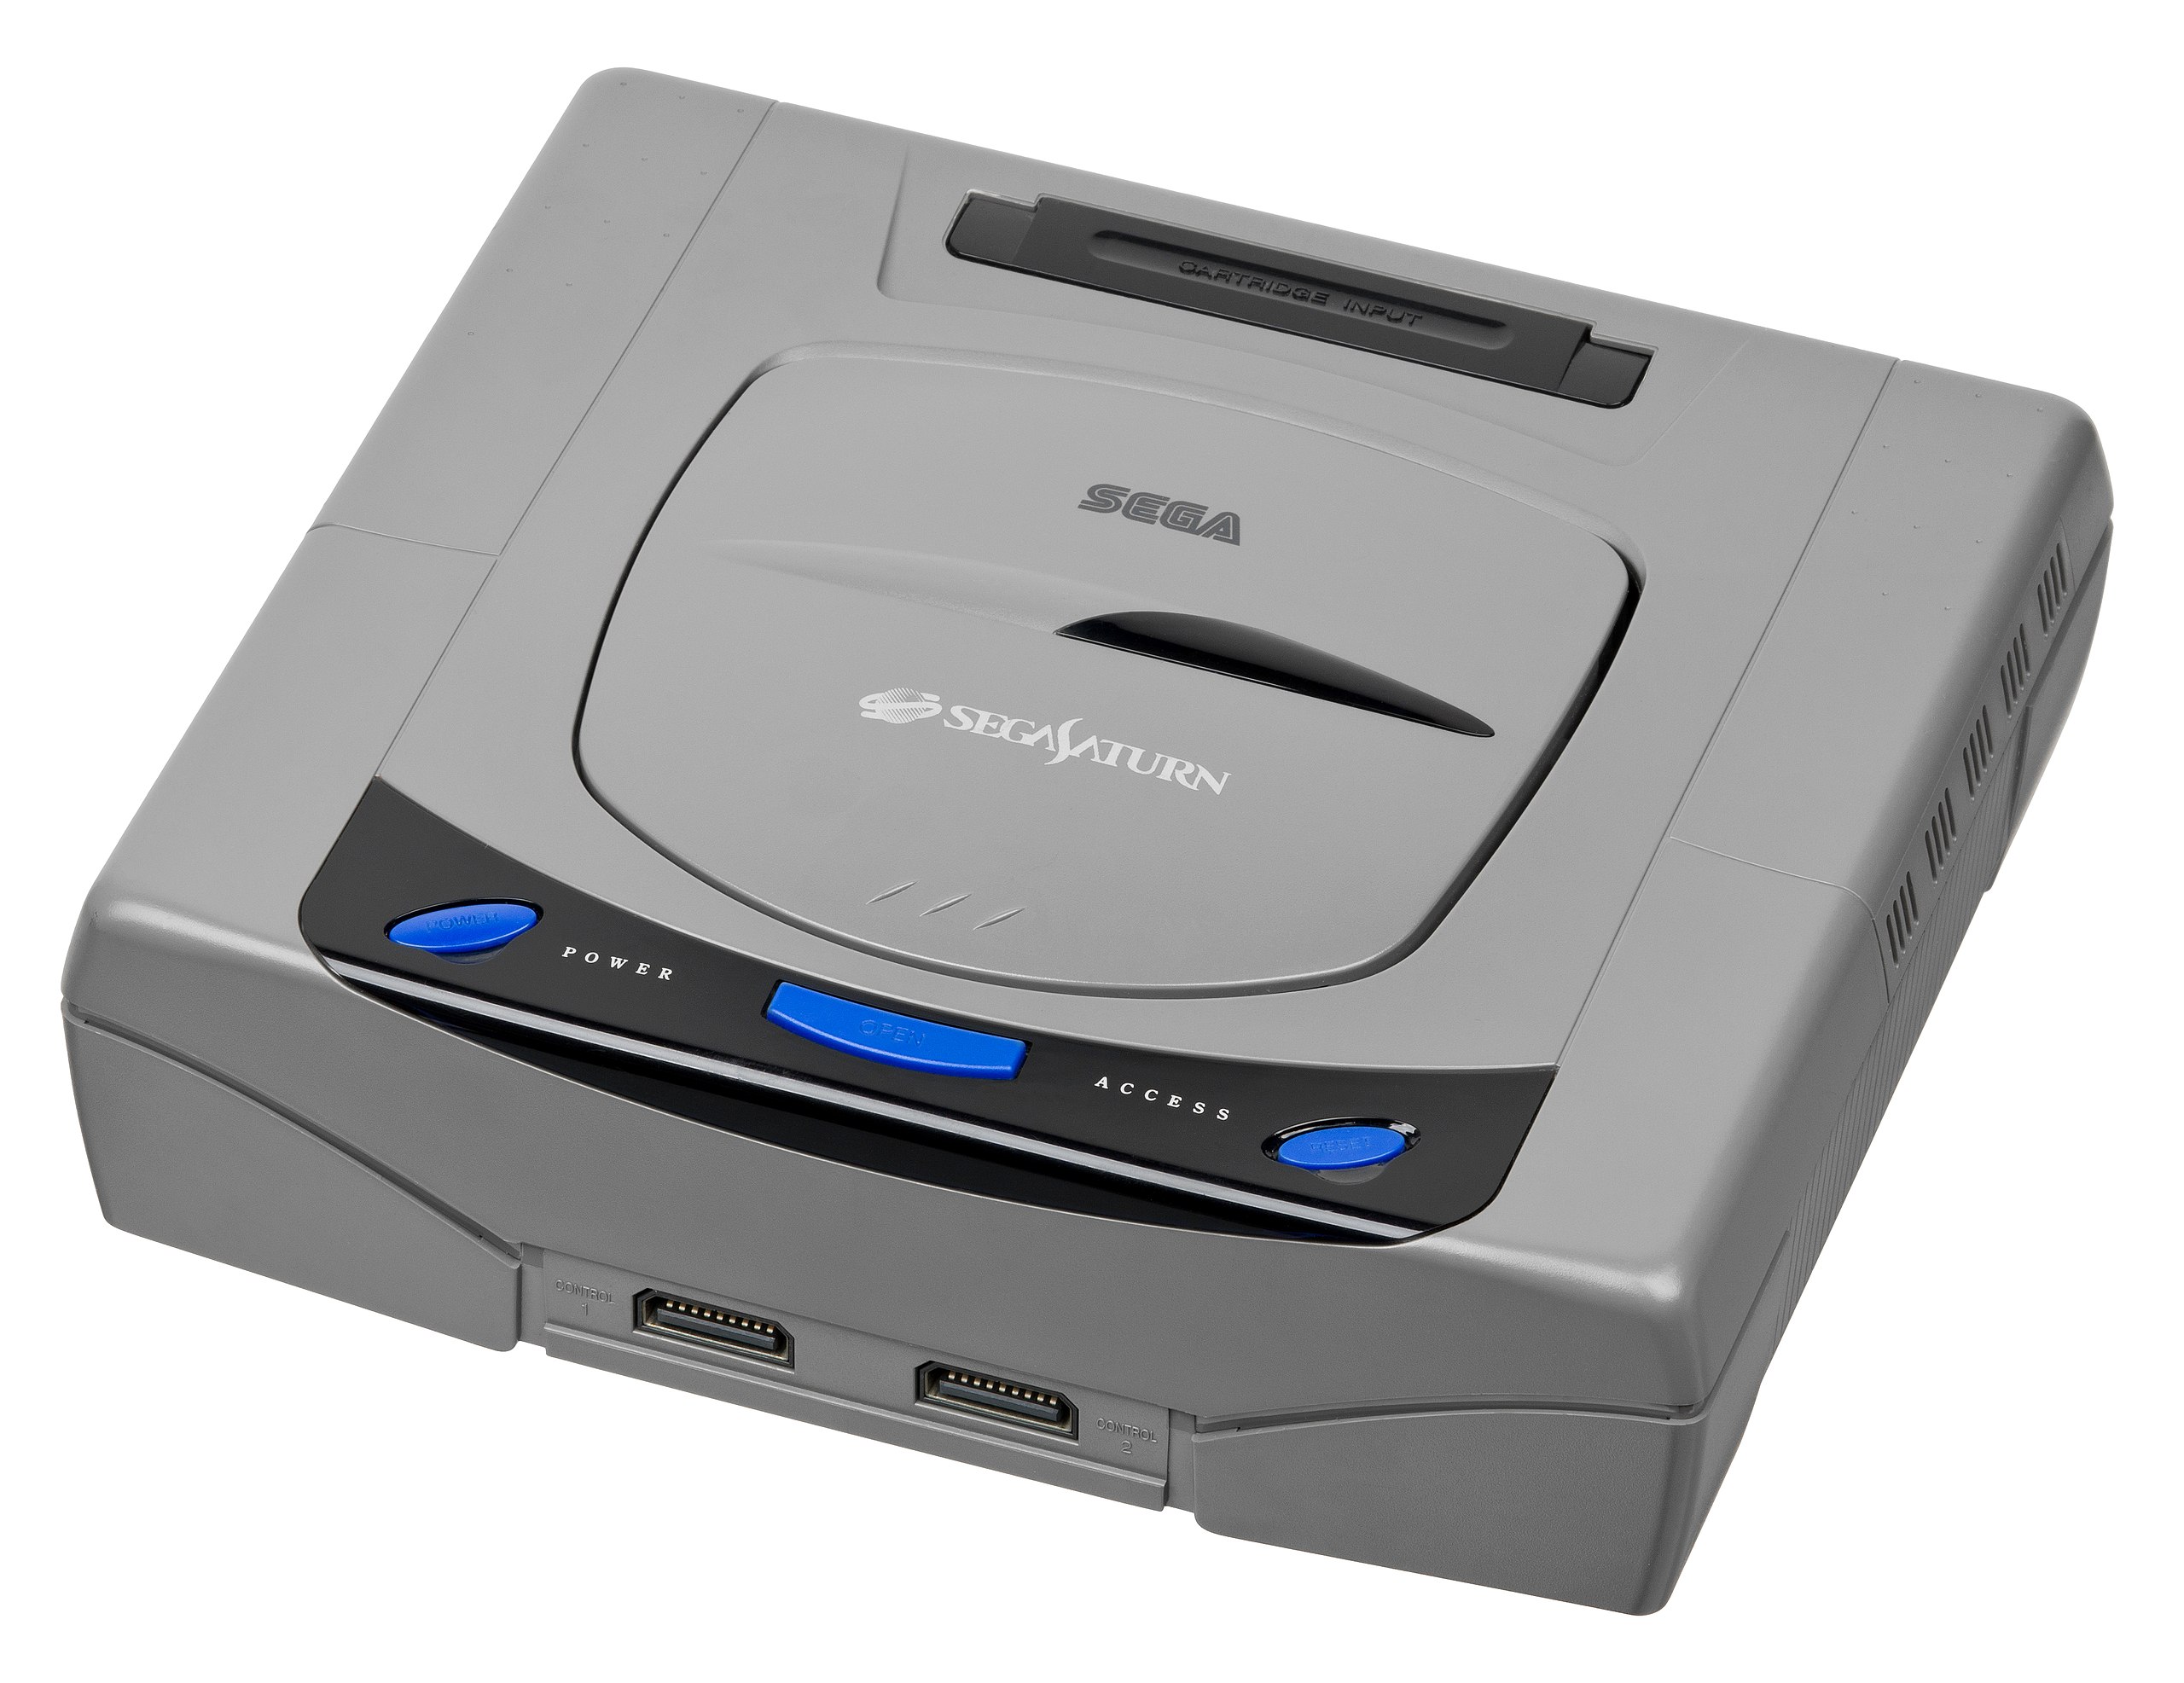 Sega Saturn Model 2 Console